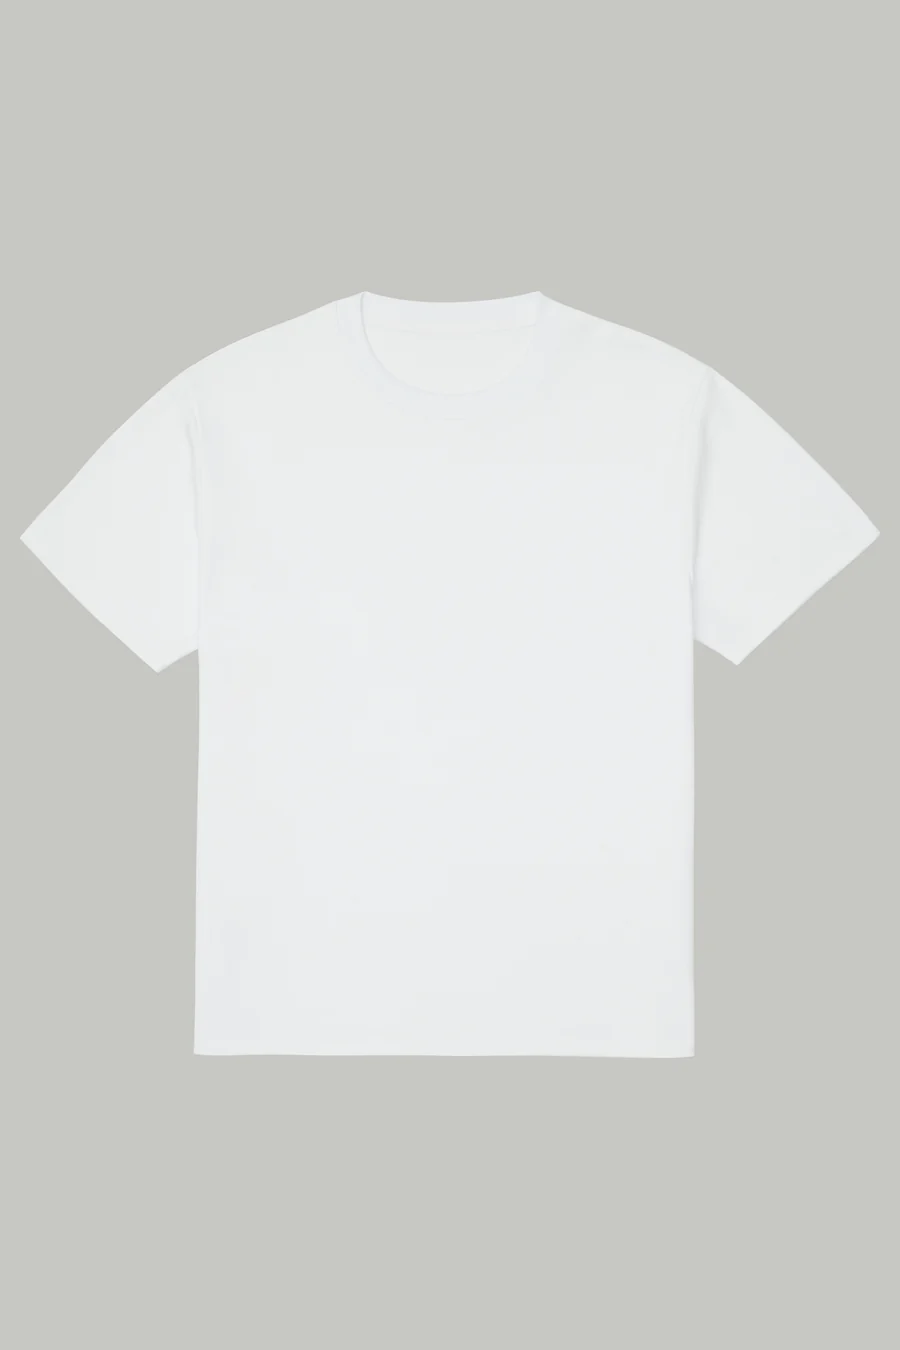 greggio blanks T-shirts TS1